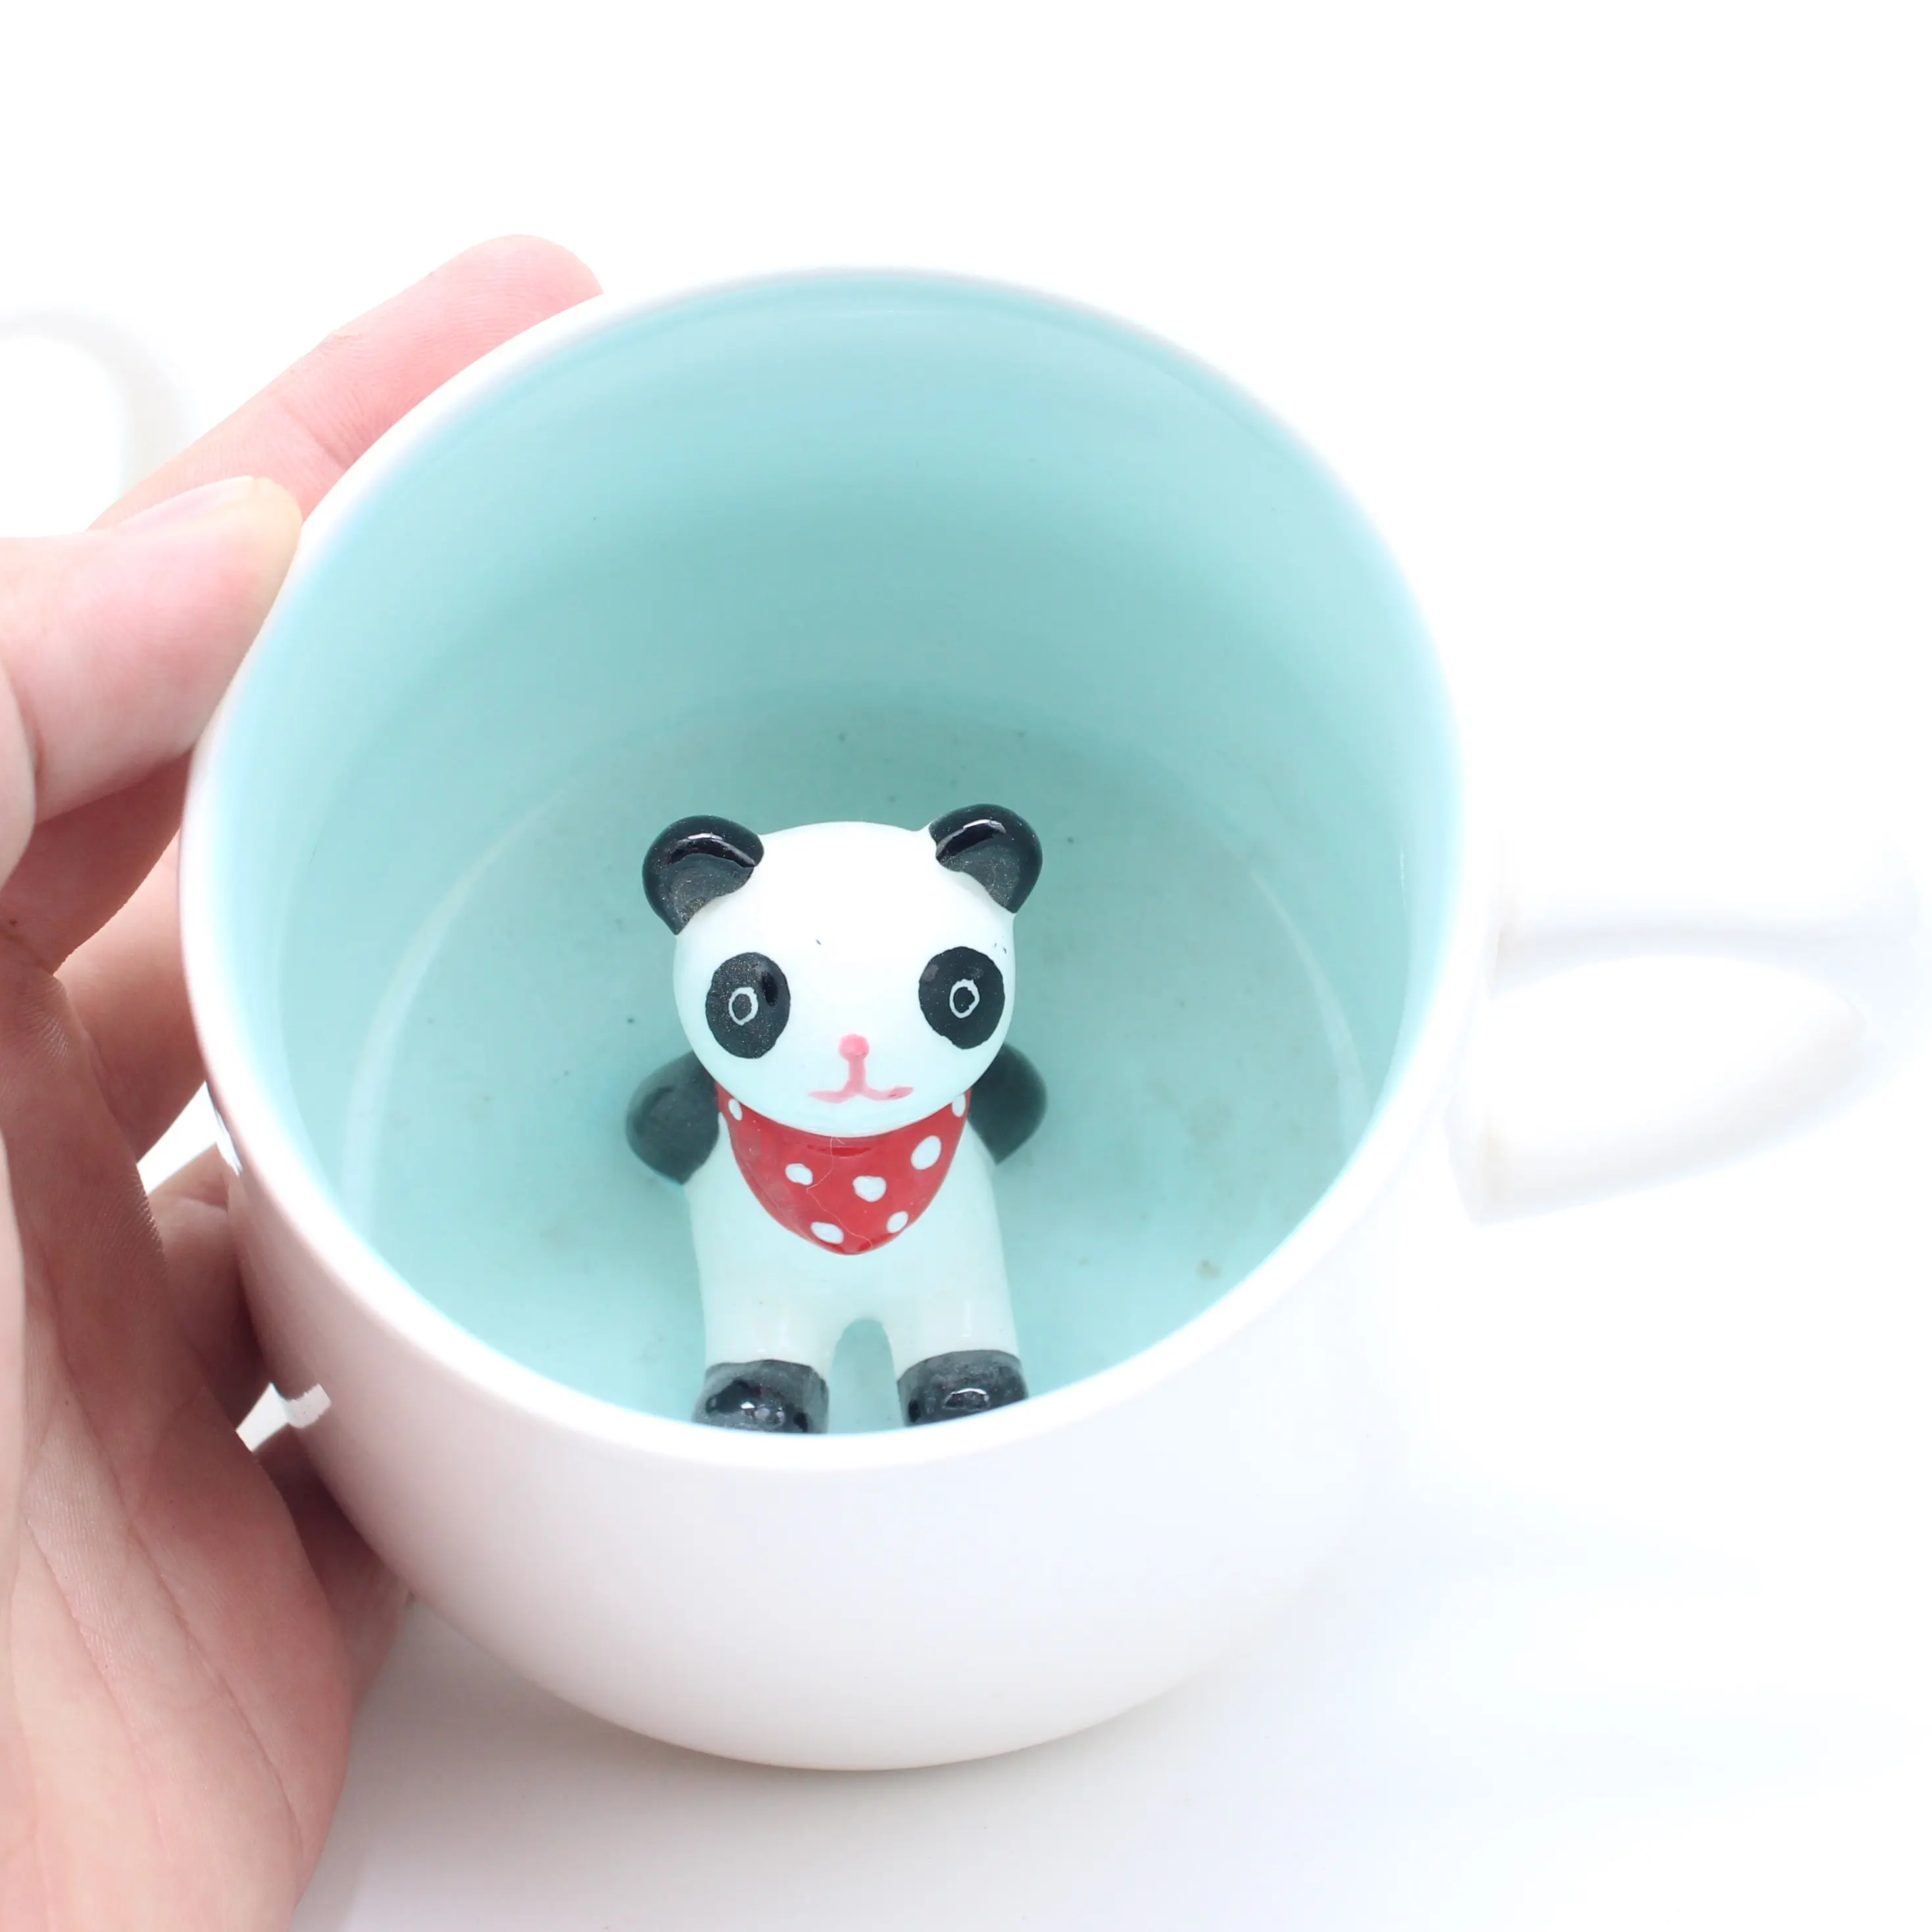 Panda Surprise 3D Coffee Mug Cute Cartoon Animal Ceramics Cup Baby Animal Inside, Best Birthday Gift 8 OZ Office Cup